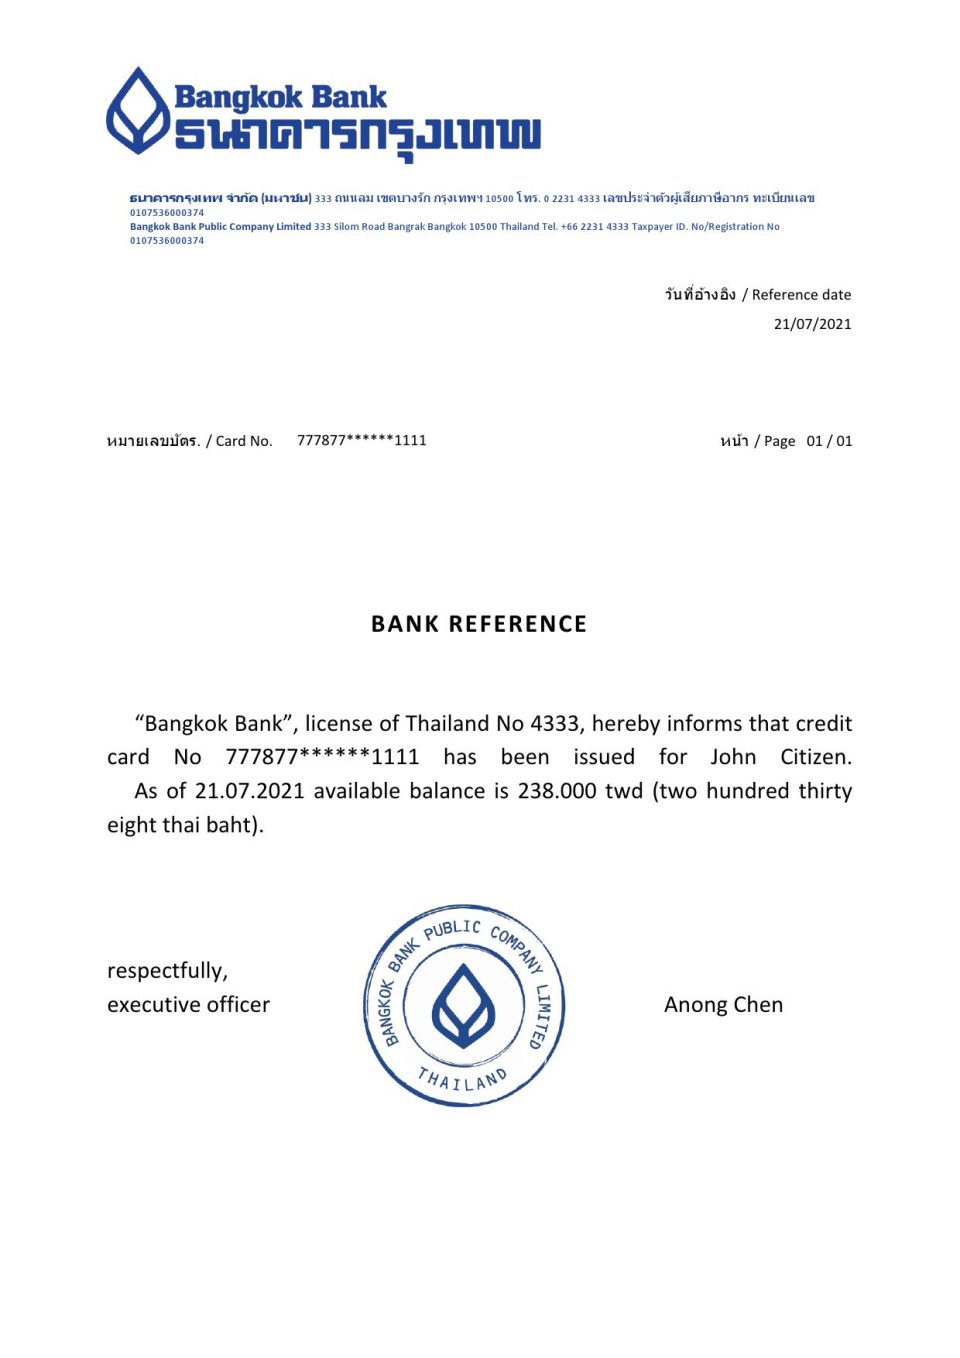 Download Thailand Bangkok Bank Reference Letter Templates | Editable Word